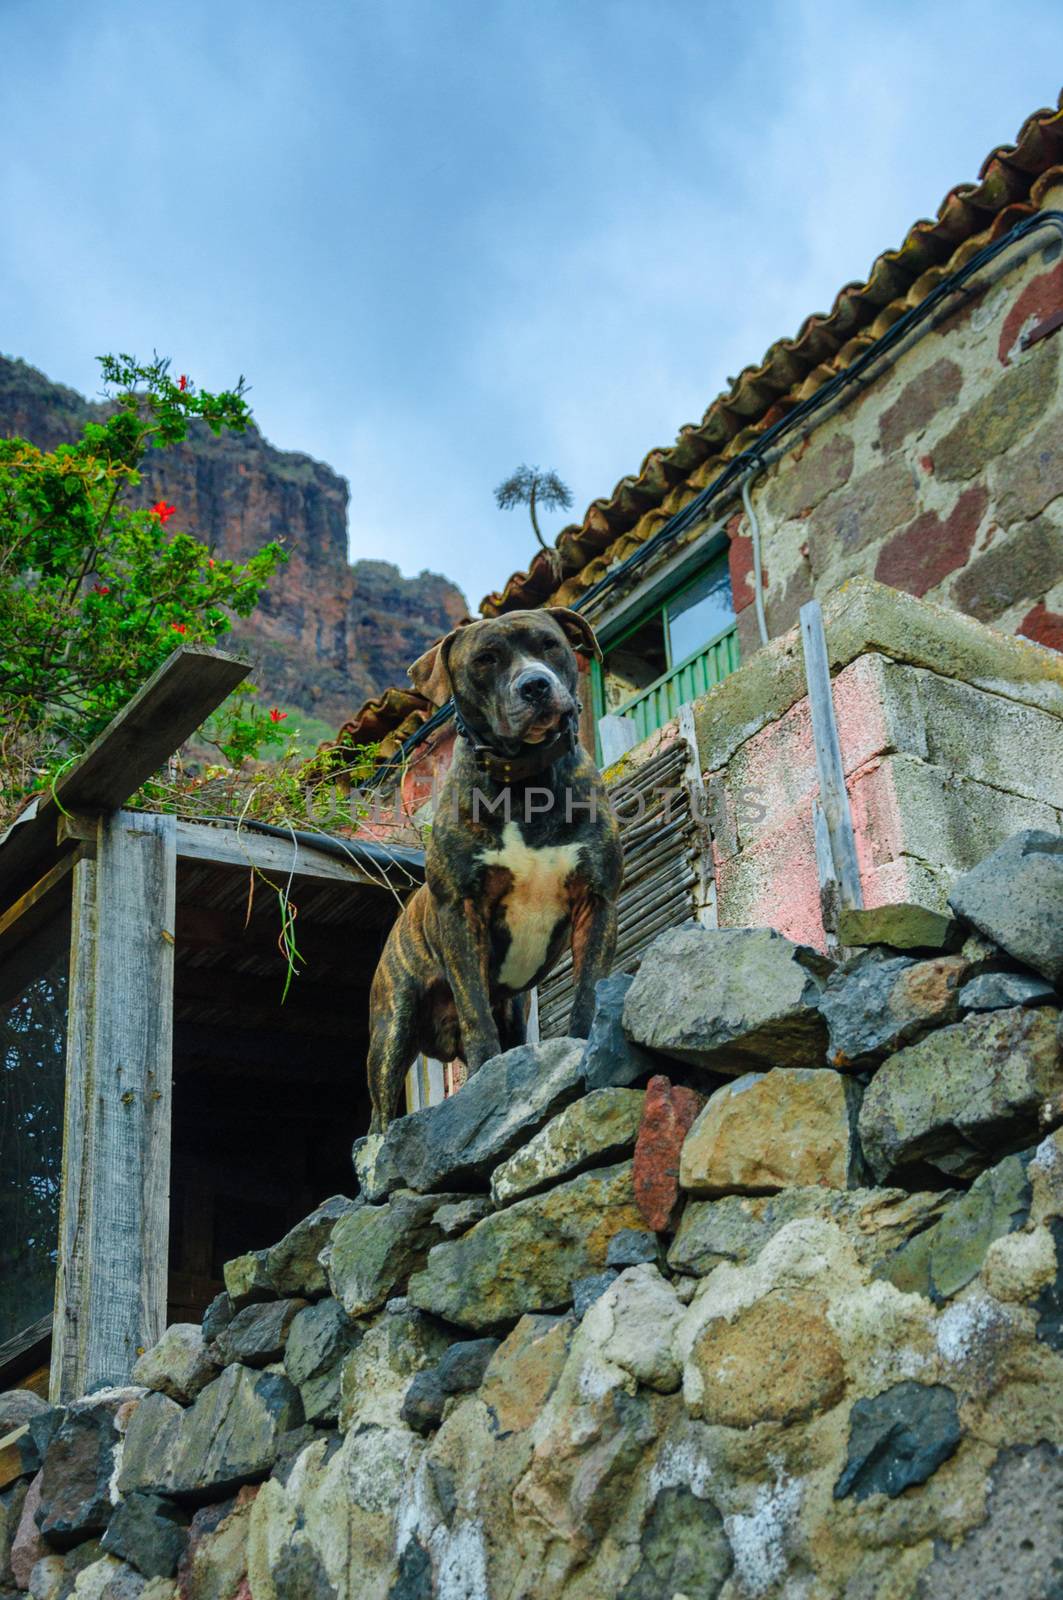 Dog on the street of Masca village, Tenerife, Canarian Islands.